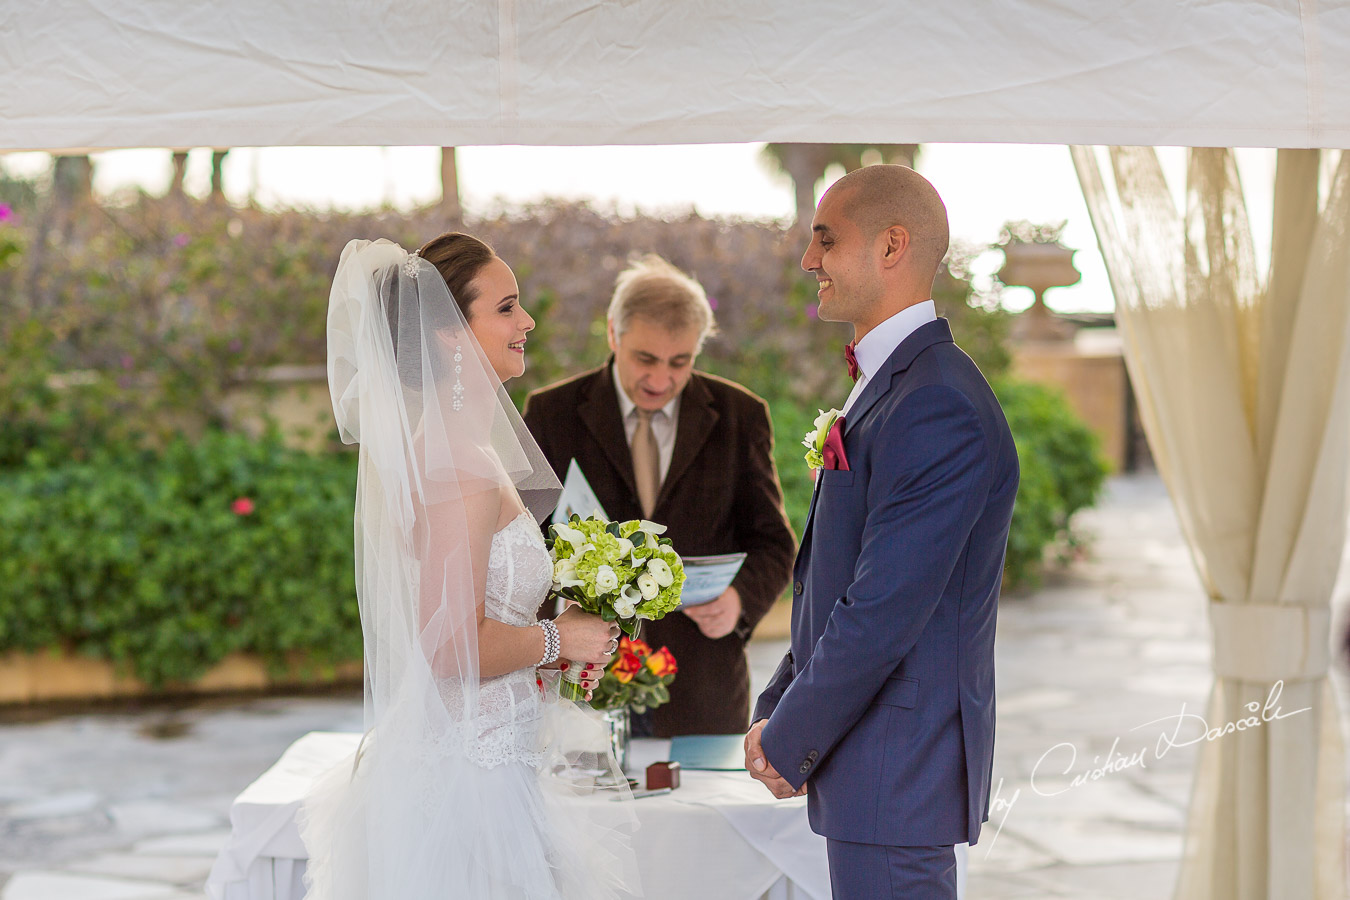 Wedding at The Elysium Hotel in Cyprus - 32